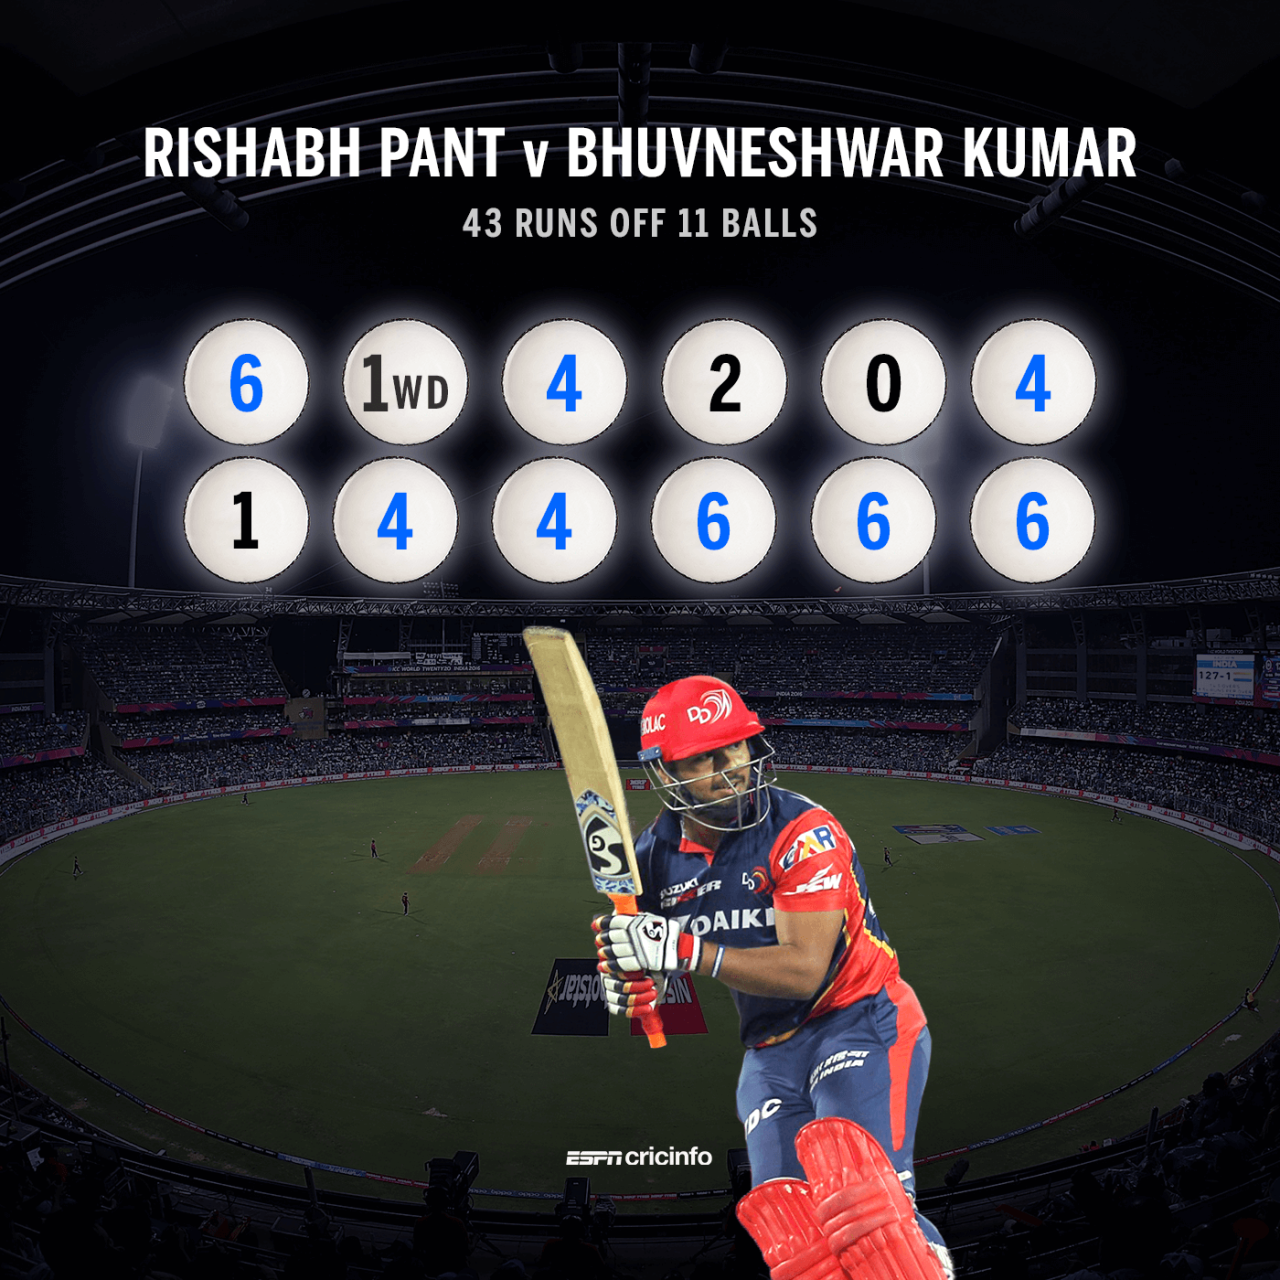 Rishabh Pant scored 43 runs off the 11 balls he faced from Bhuvneshwar Kumar, May 10, 2018